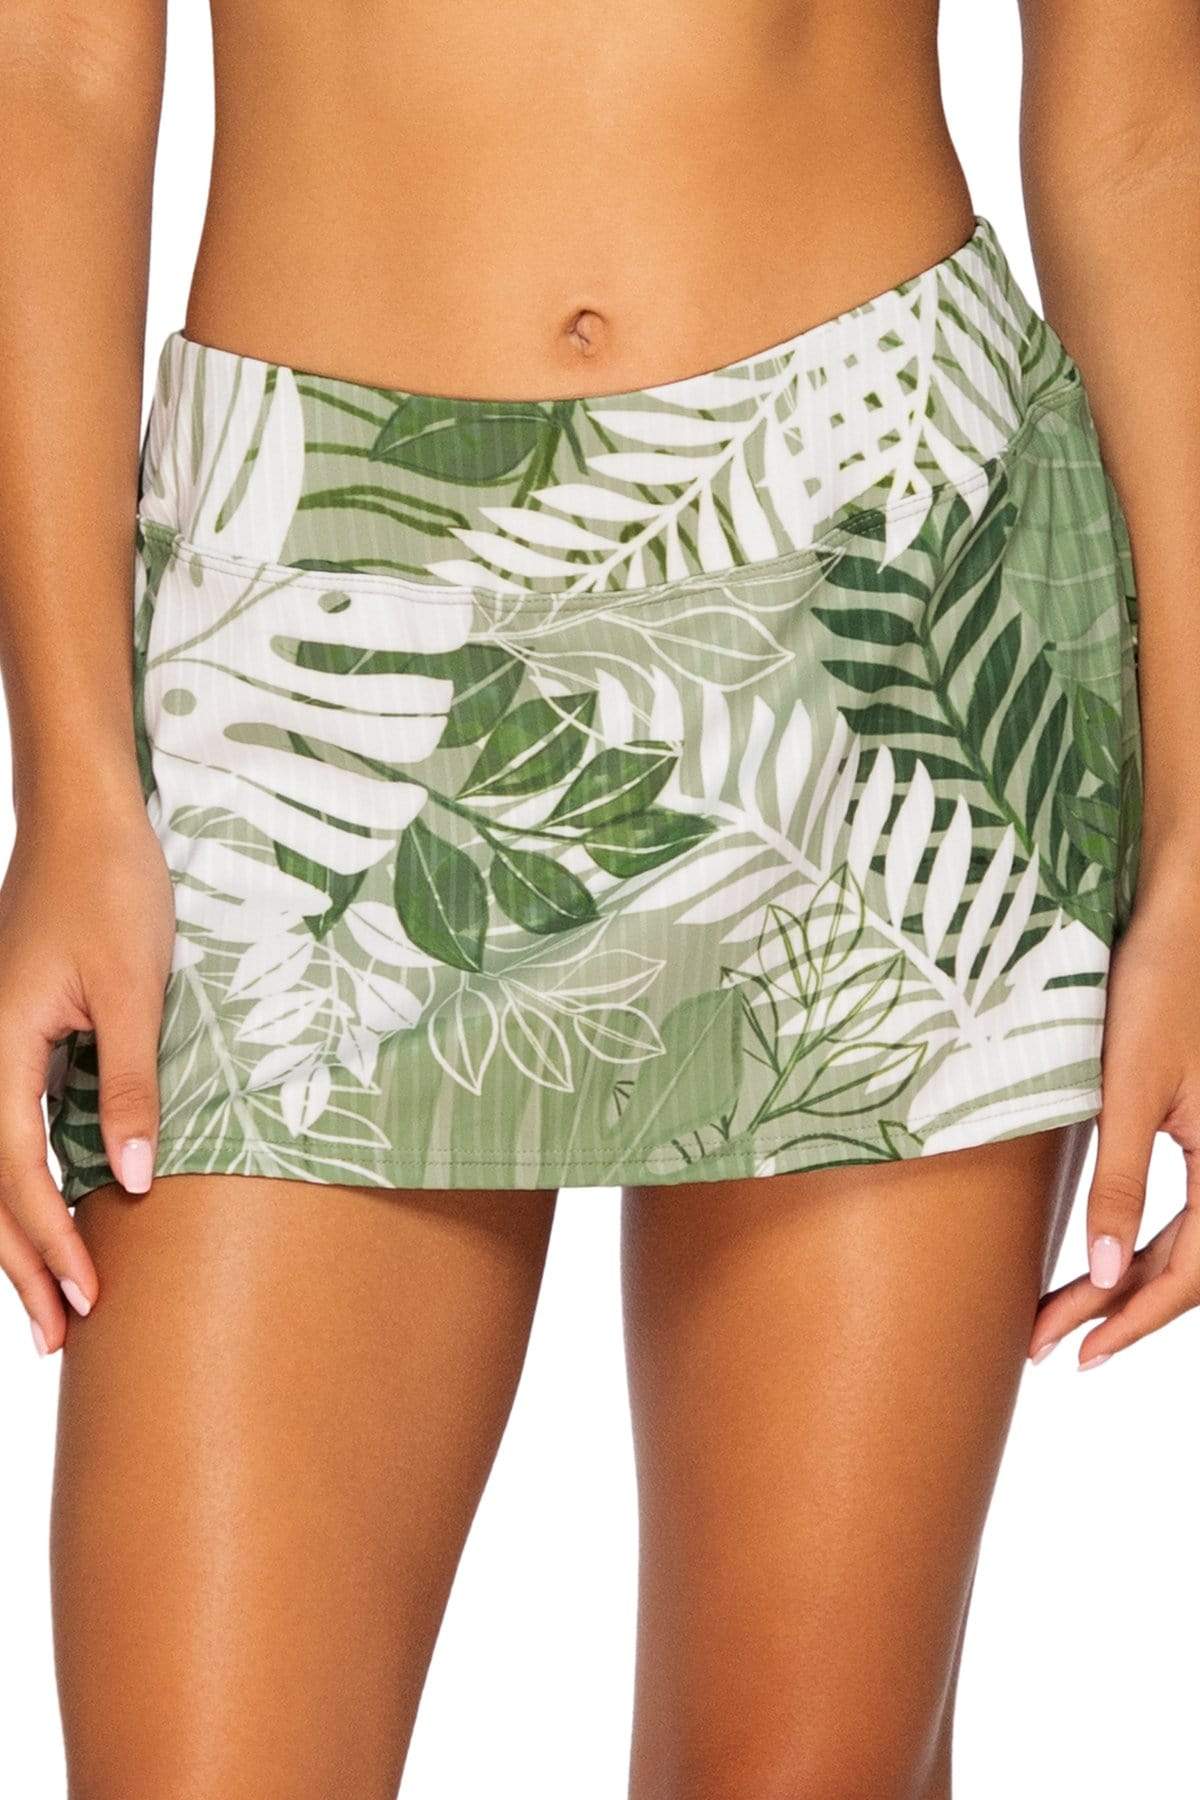 Bestswimwear -  Sunsets Palm Grove Sporty Swim Skirt